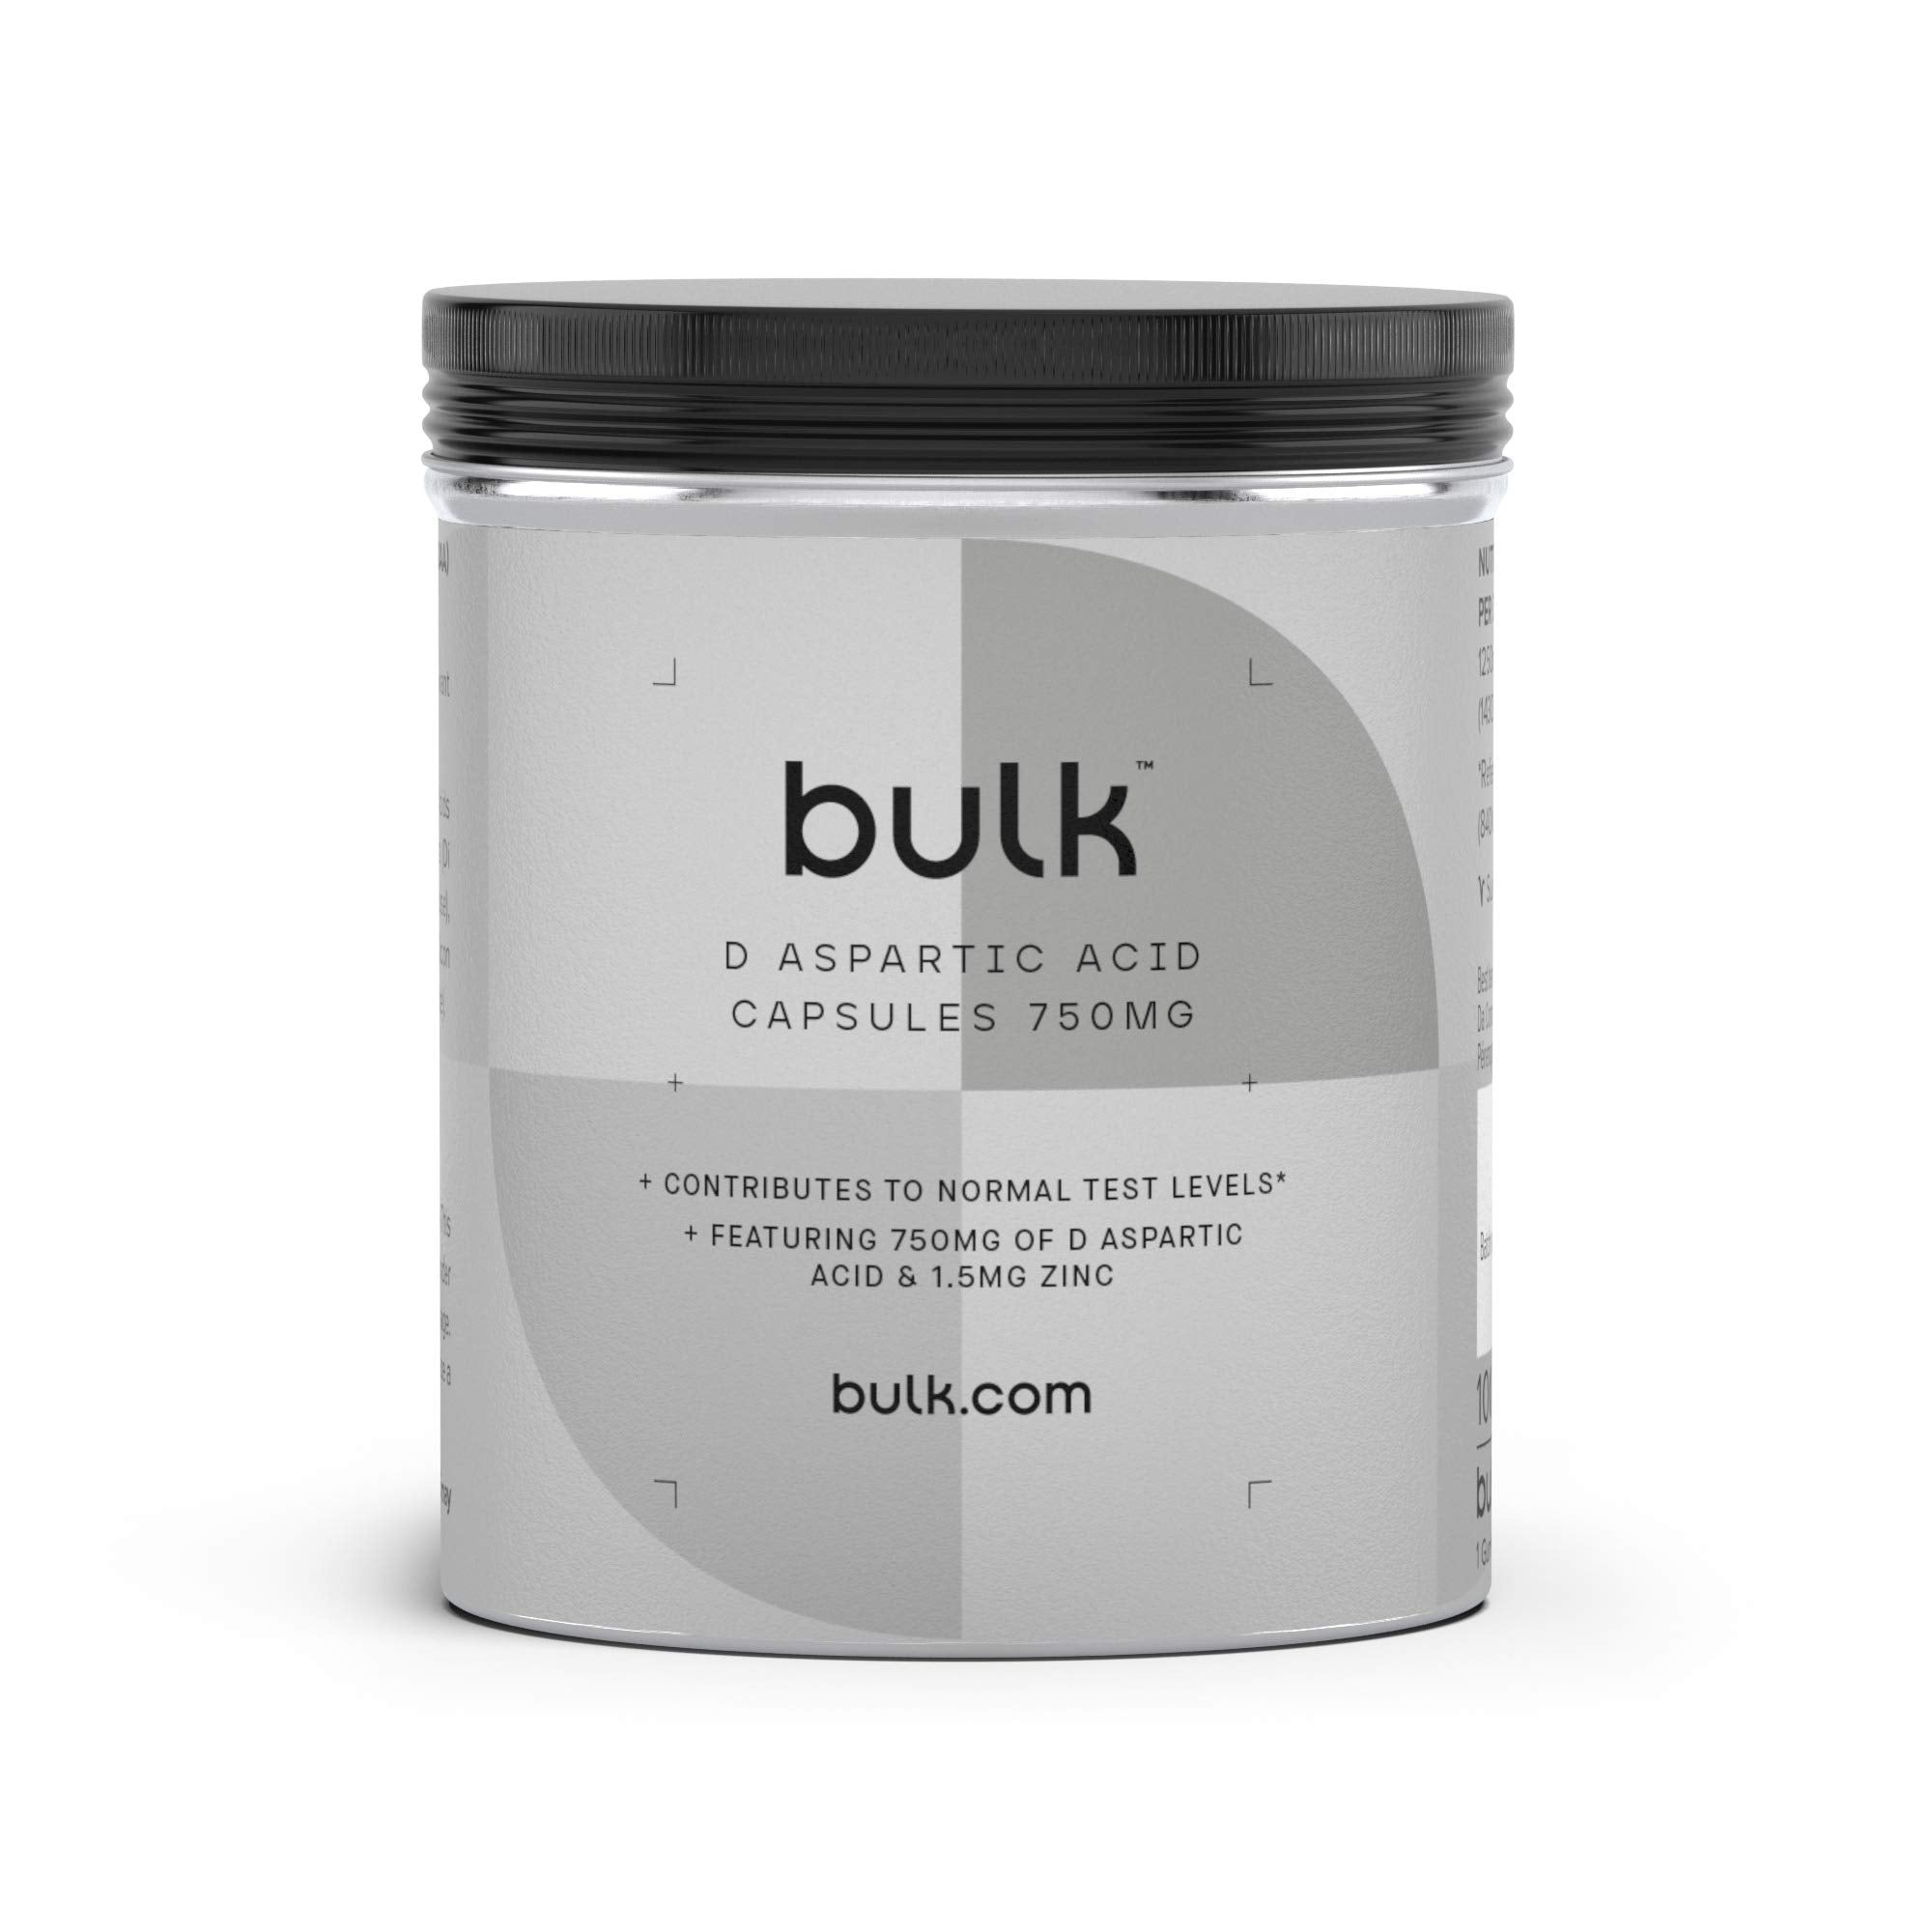 Bulk Pure D Aspartic Acid Capsules, 750 mg, Pack of 120, Packaging May Vary